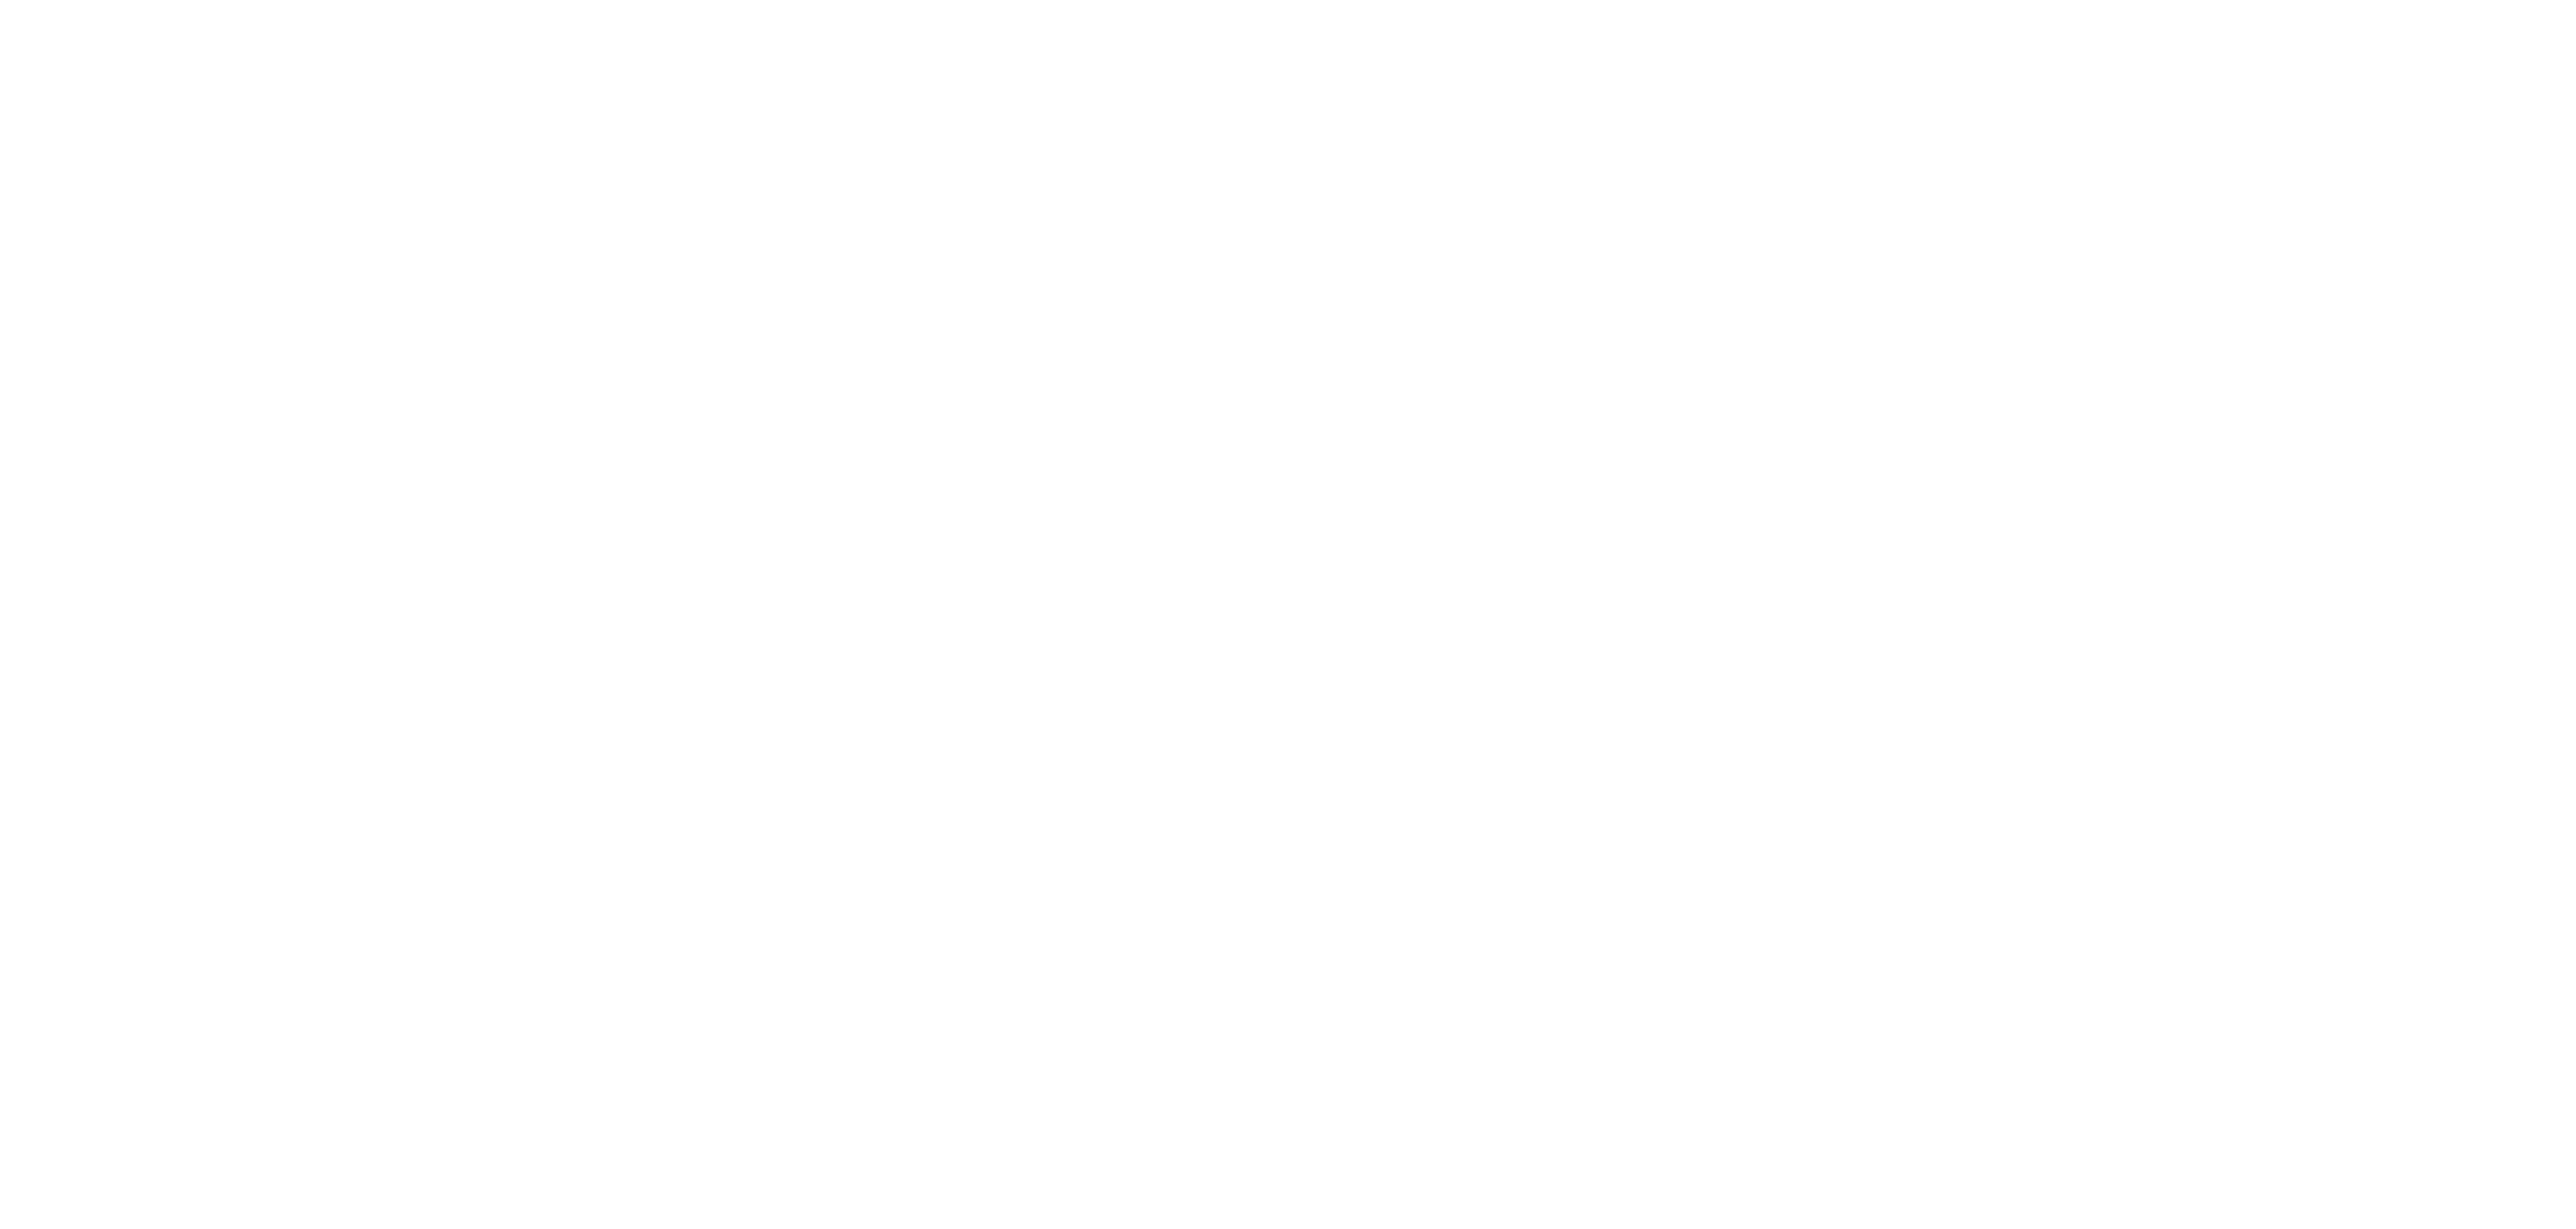 Jetex logo.